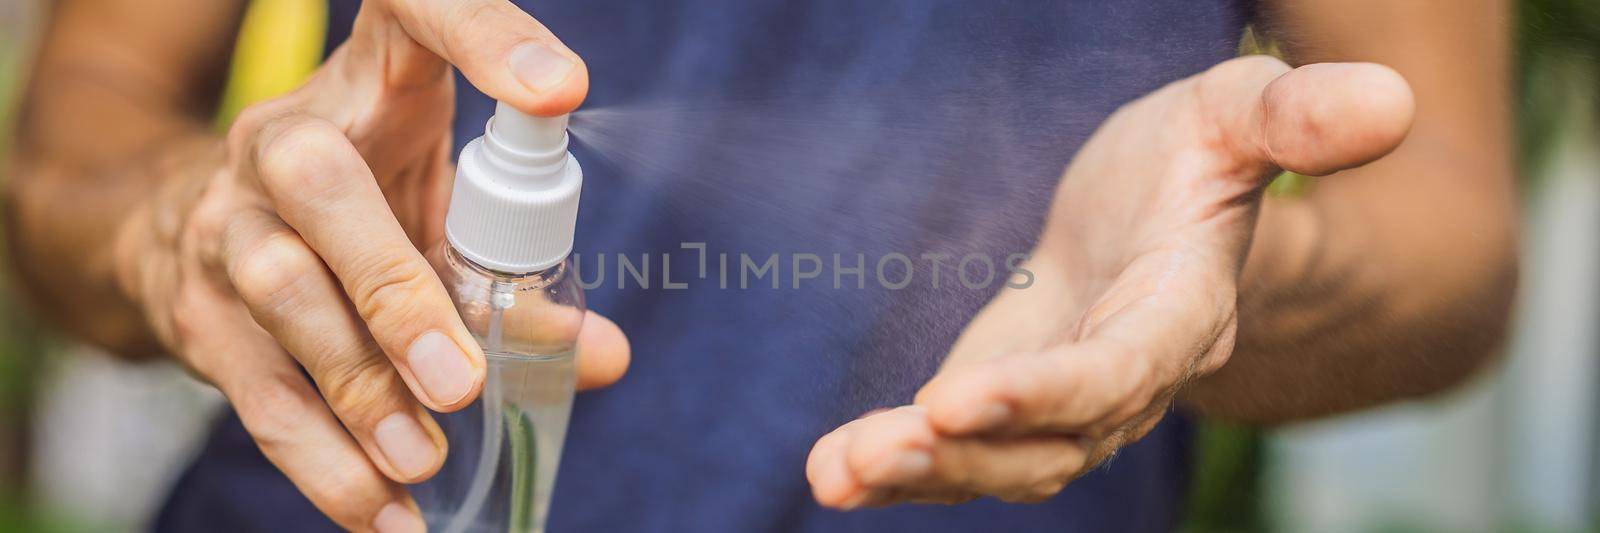 Men's hands using wash hand sanitizer gel BANNER, LONG FORMAT by galitskaya